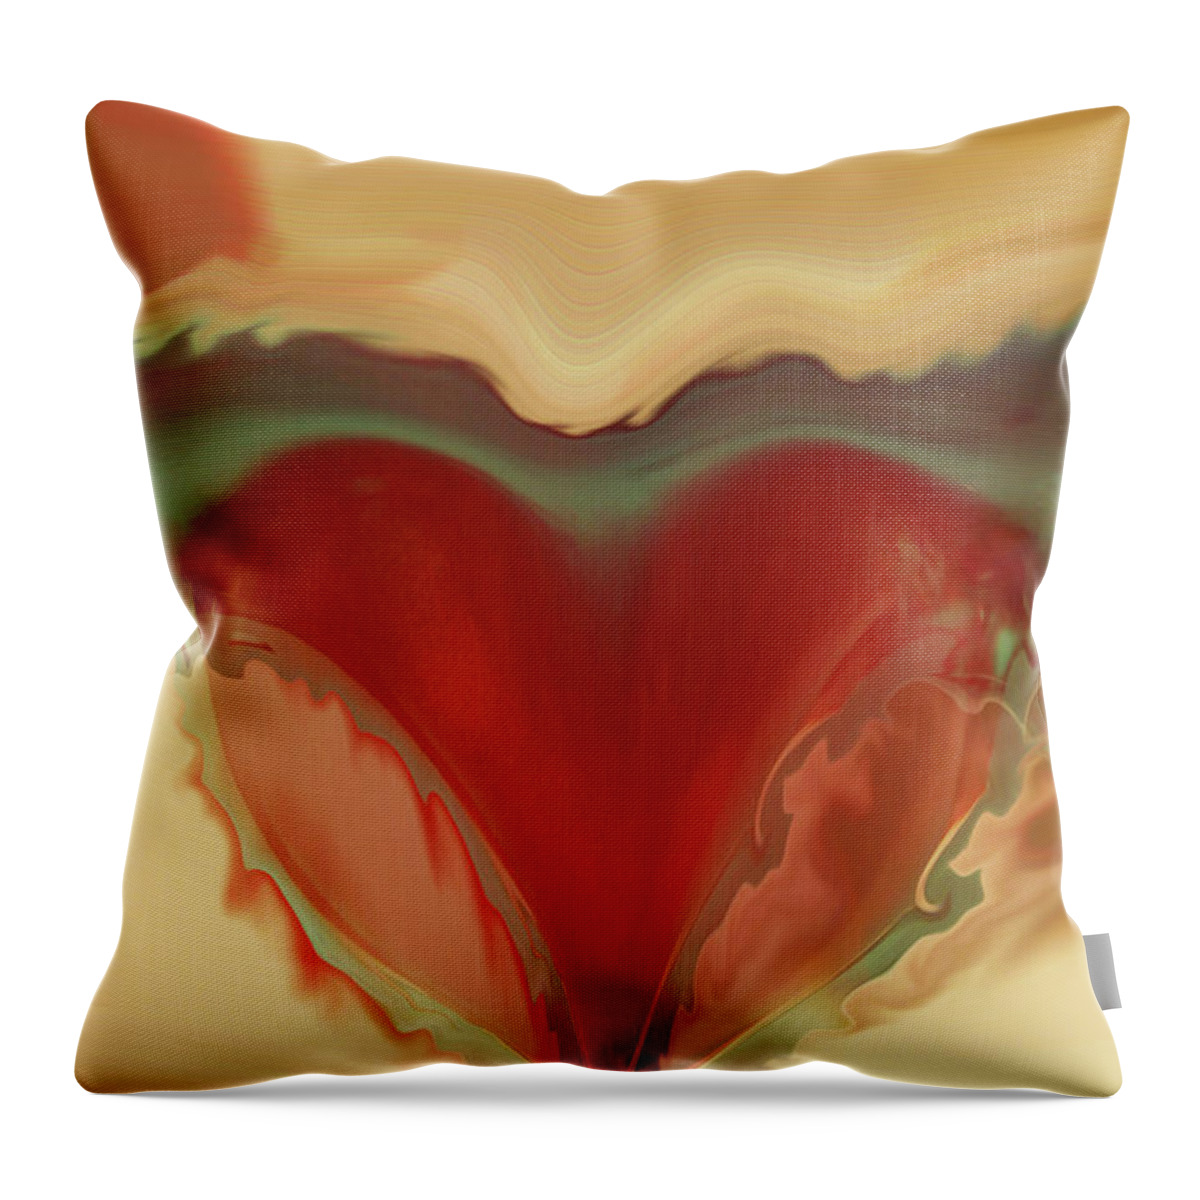 Horned Heart Throw Pillow featuring the digital art Horned Heart by Linda Sannuti